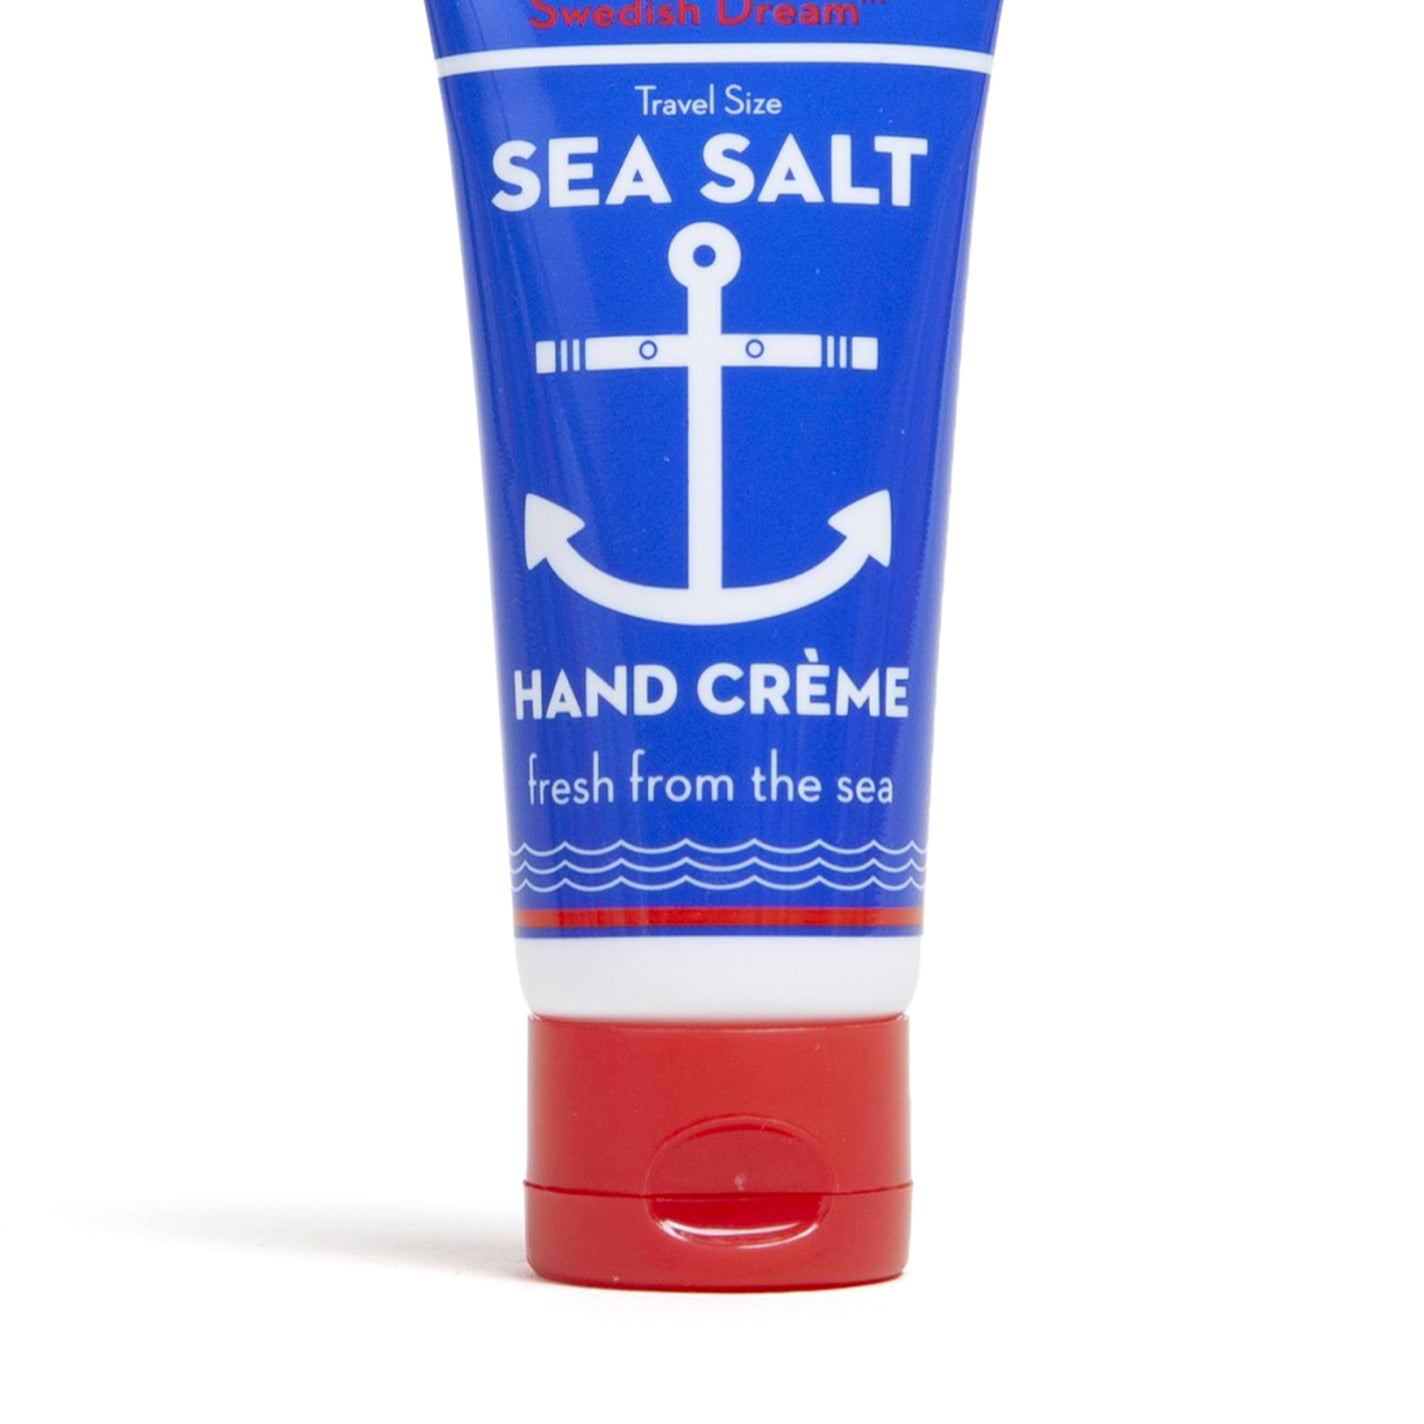 Kalastyle Sea Salt Hand Creme